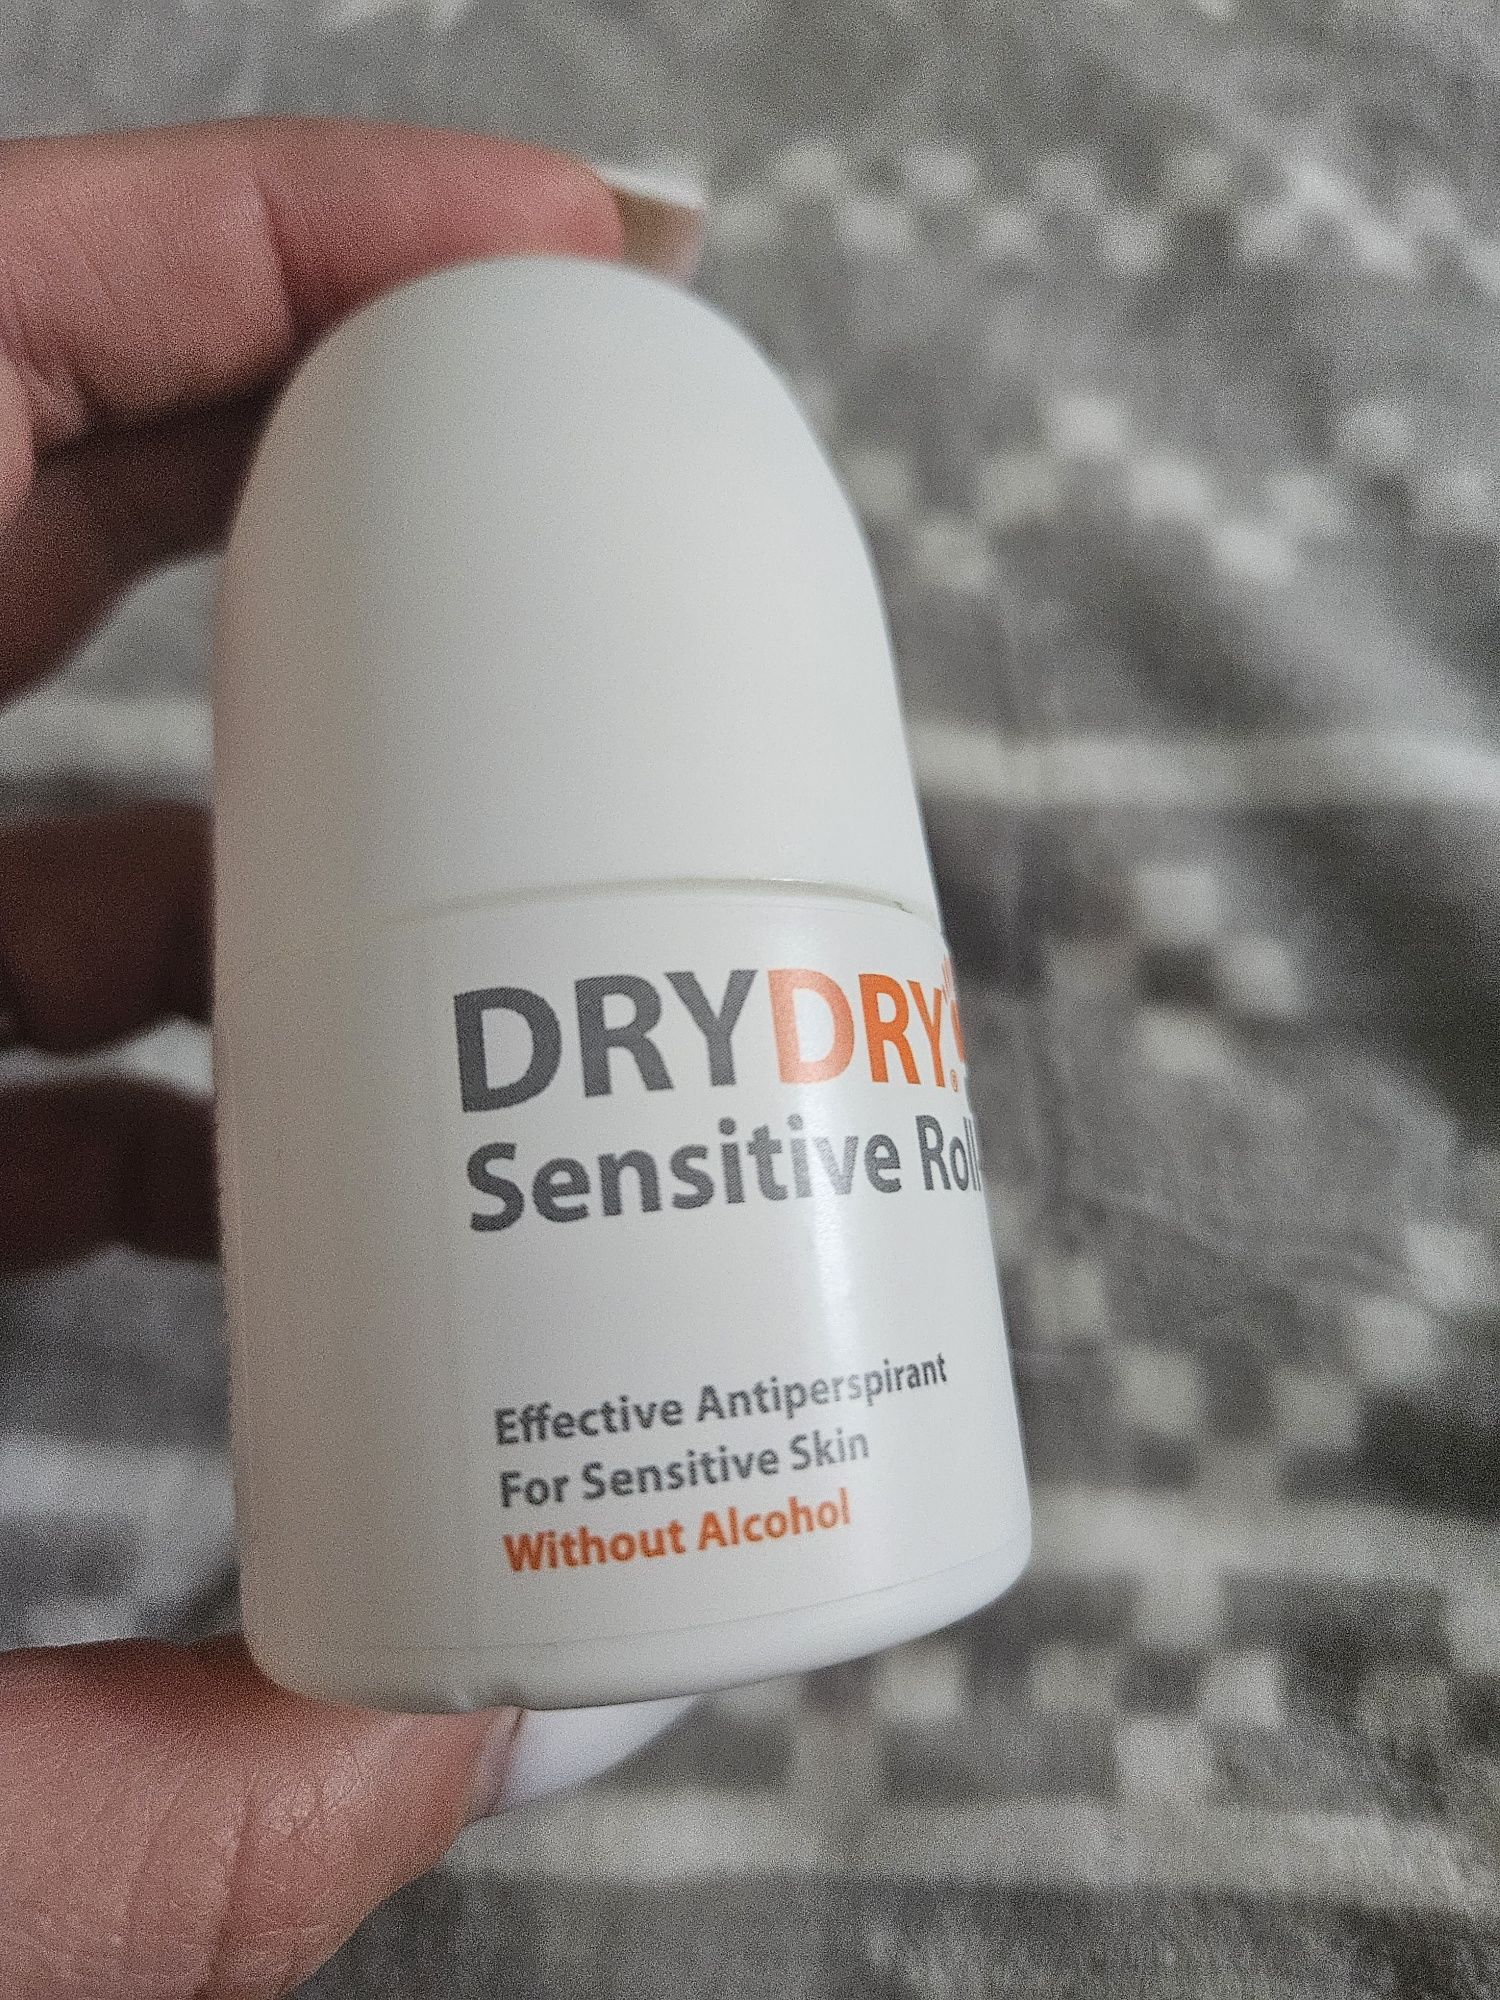 Dry dry sensitive